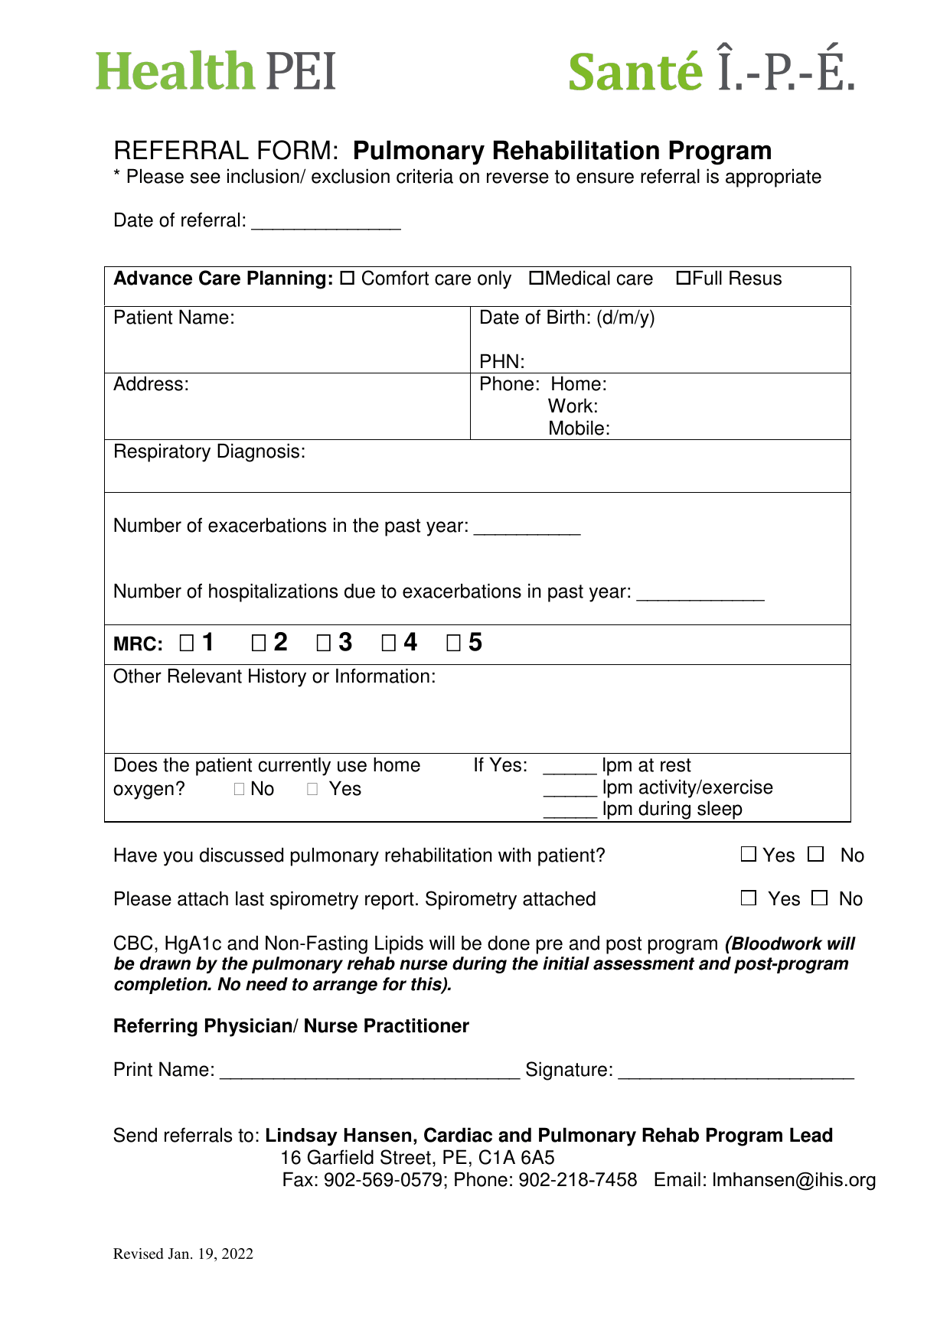 Referral Form: Pulmonary Rehabilitation Program - Prince Edward Island, Canada, Page 1